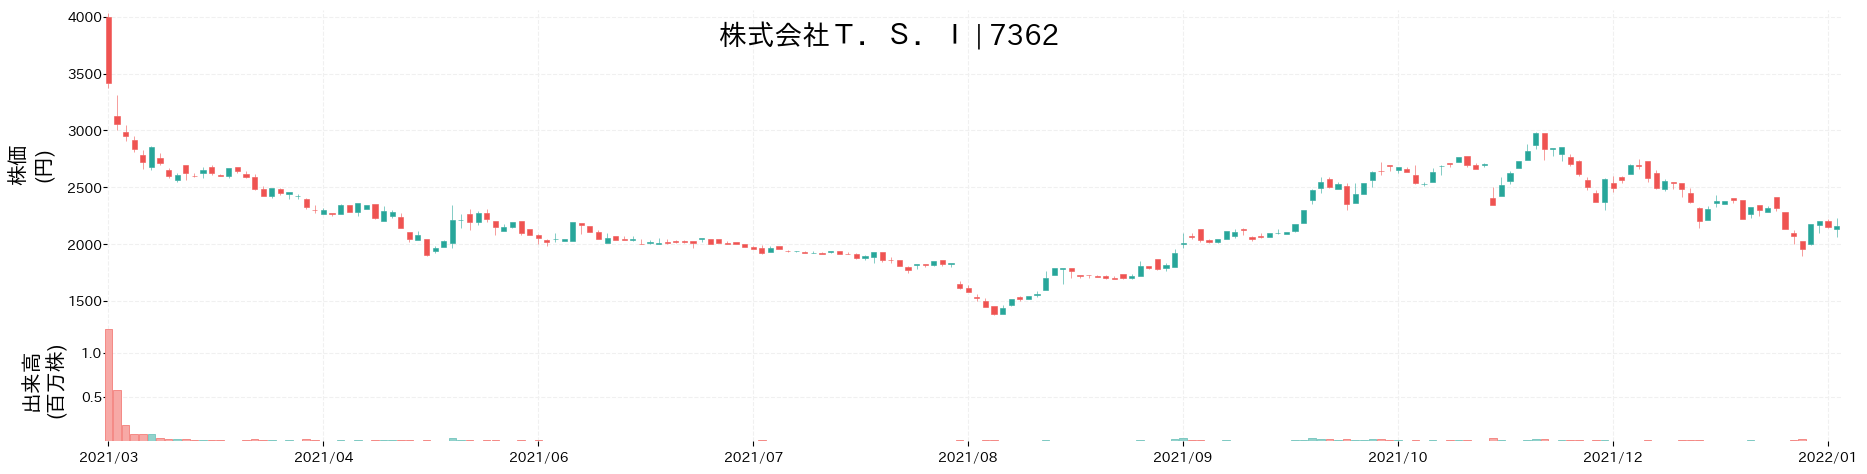 T.S.Iの株価推移(2021)